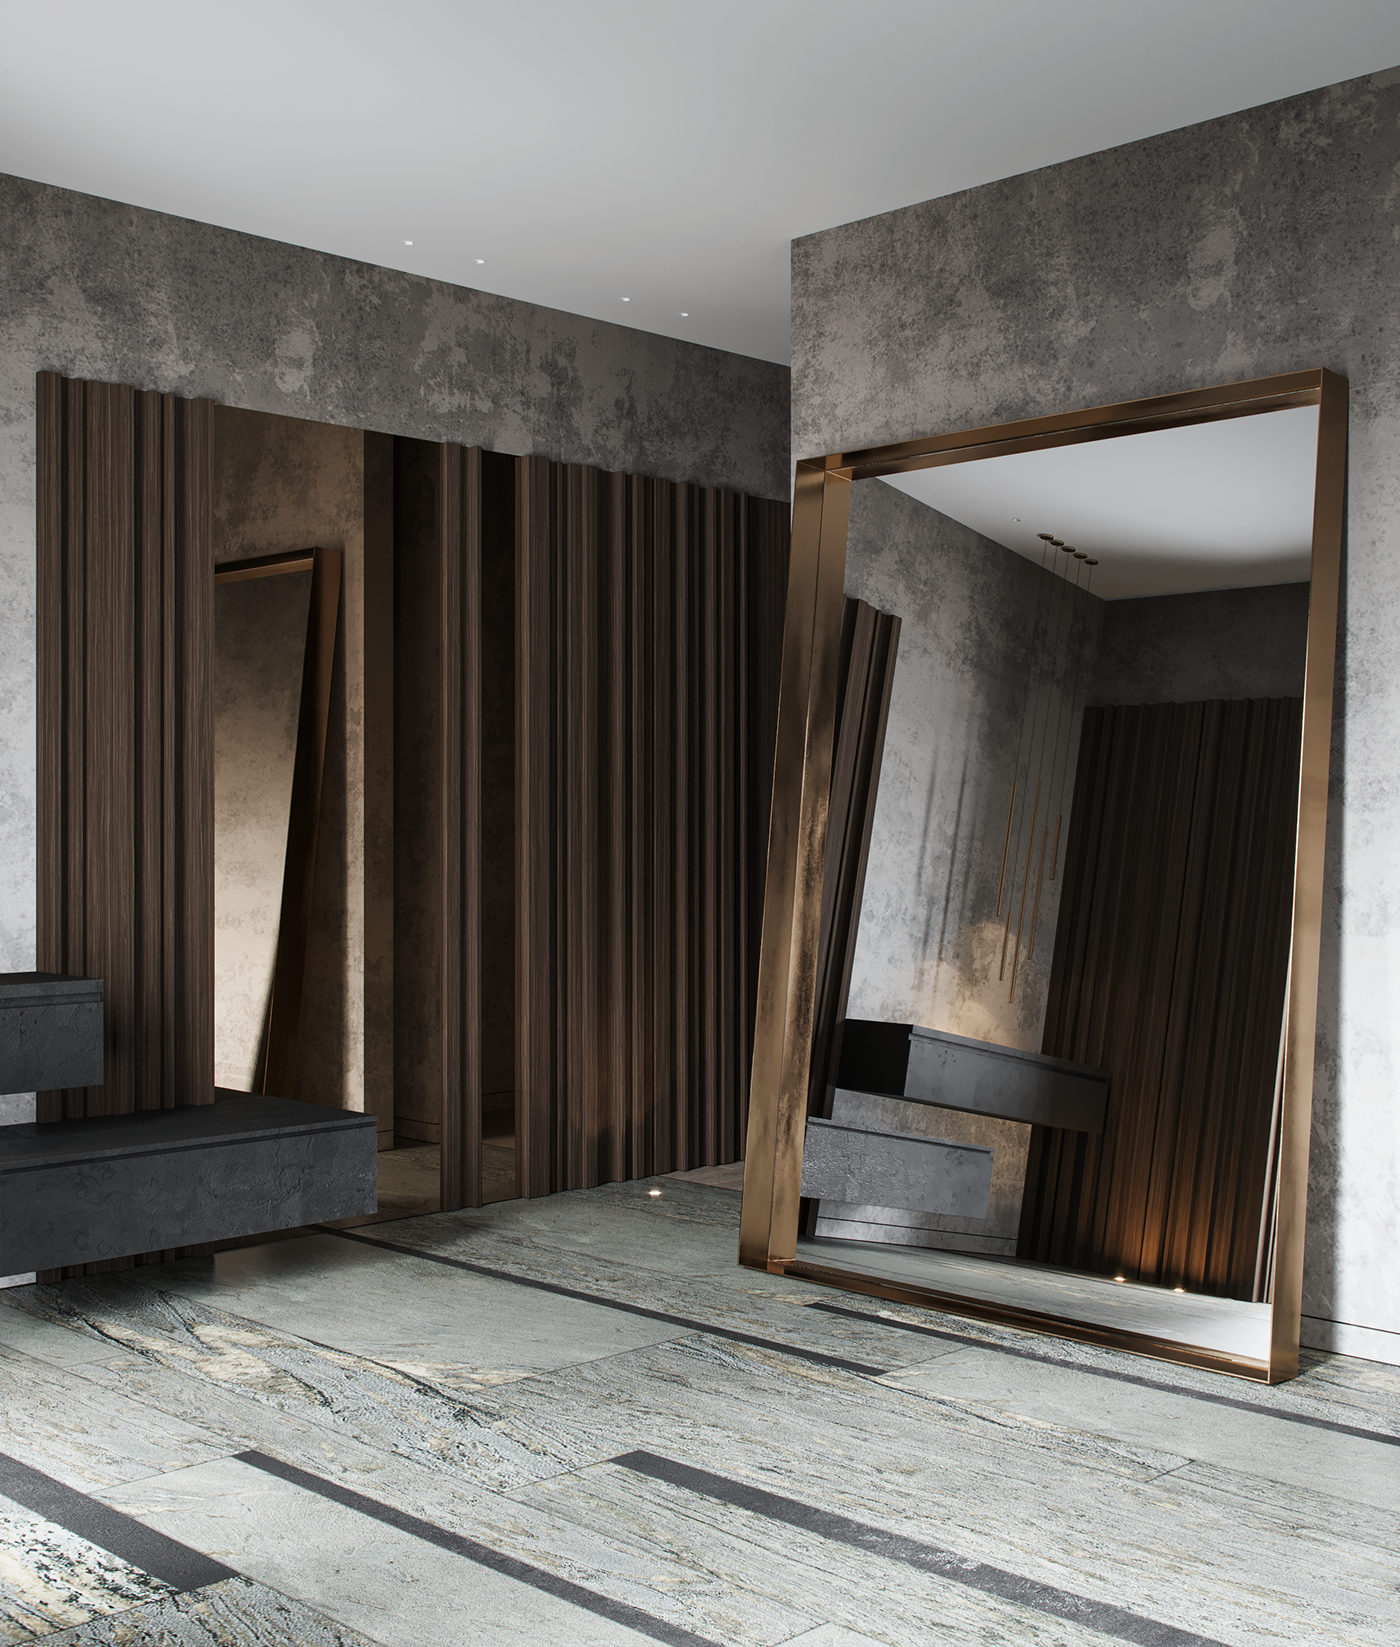 mofern modernhouse Privatehouse Spa spazone moderninterior interiordesign luxury